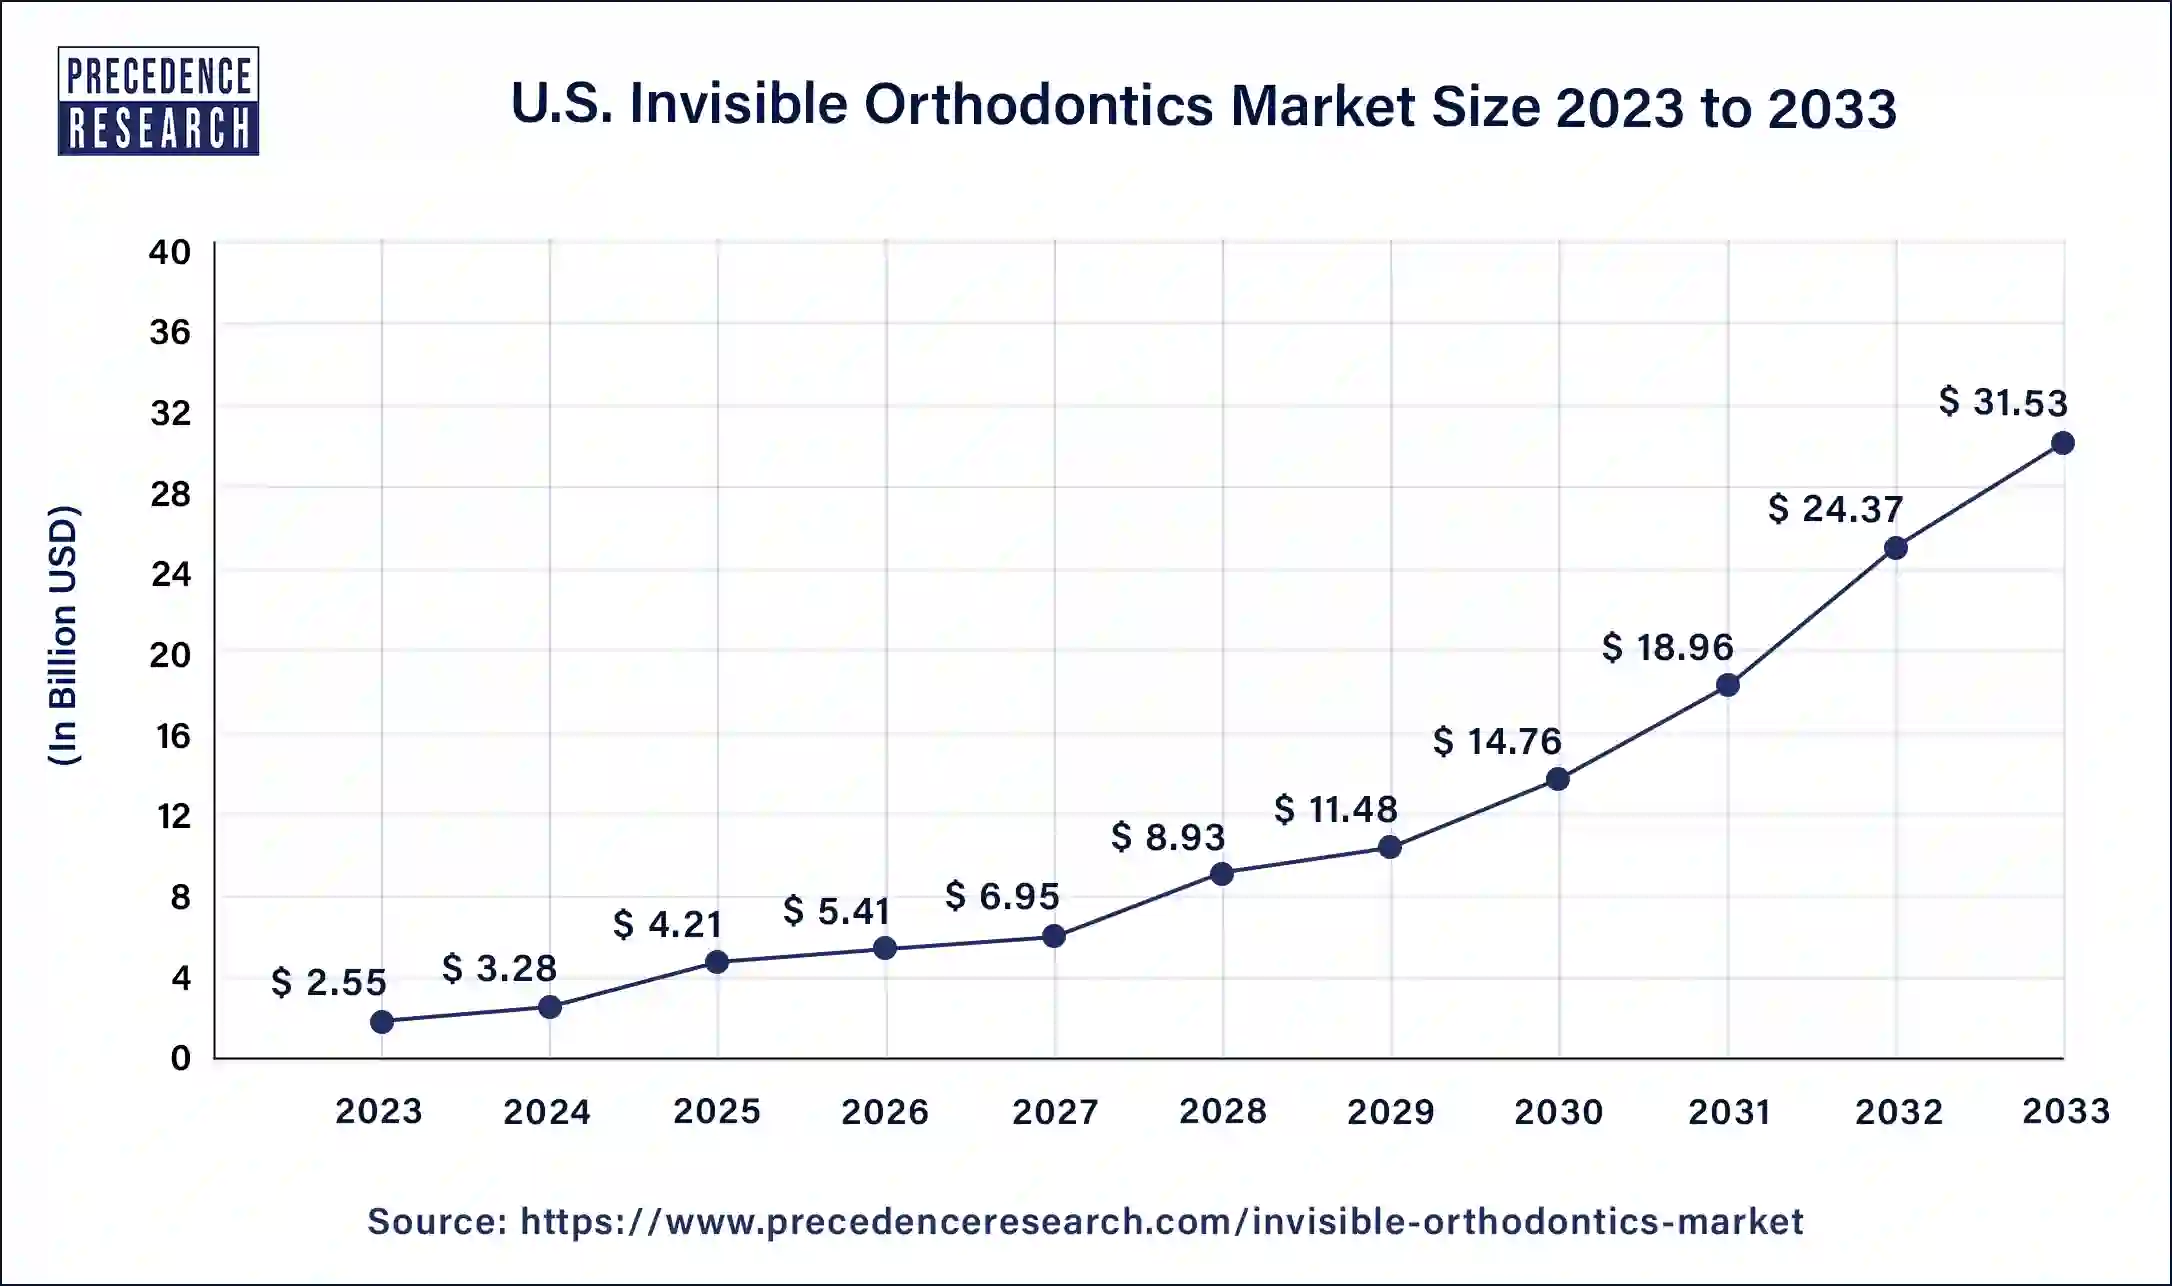 U.S. Invisible Orthodontics Market Size 2024 to 2033